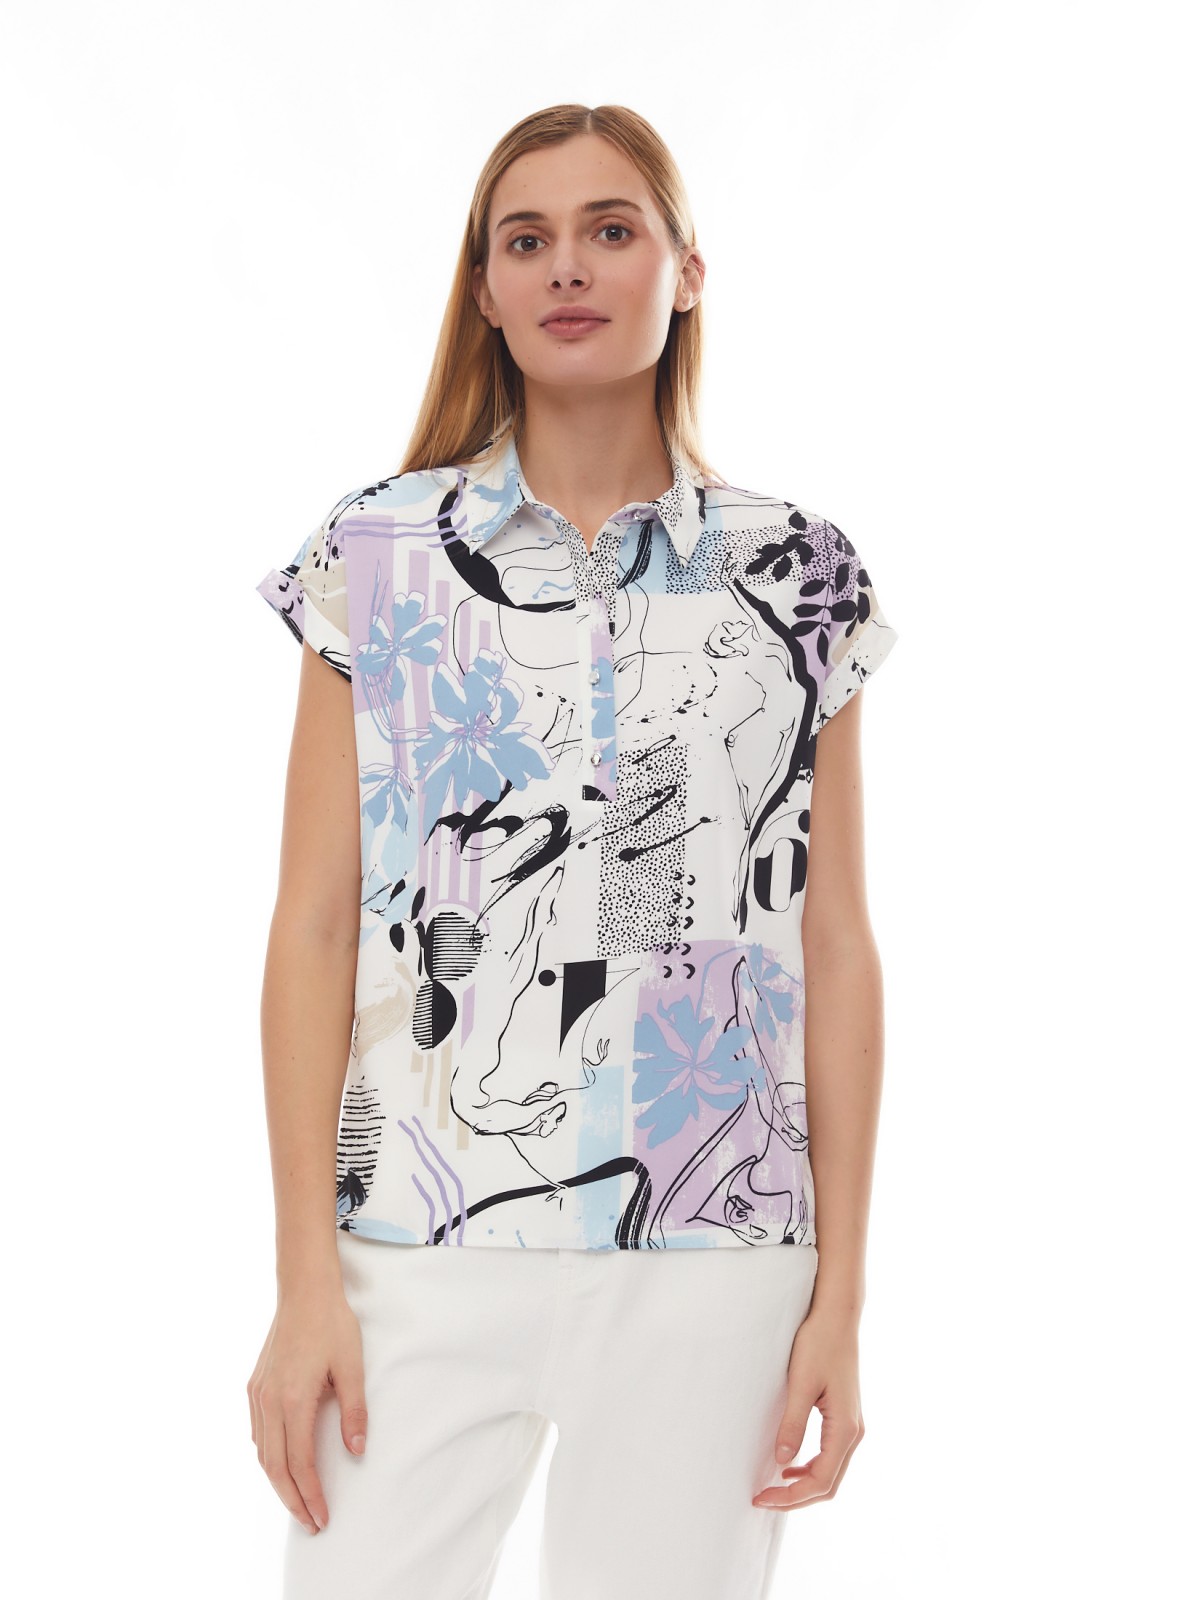 Принтованная блузка-рубашка с коротким рукавом zolla 02413128Y112, цвет молоко, размер XS - фото 3